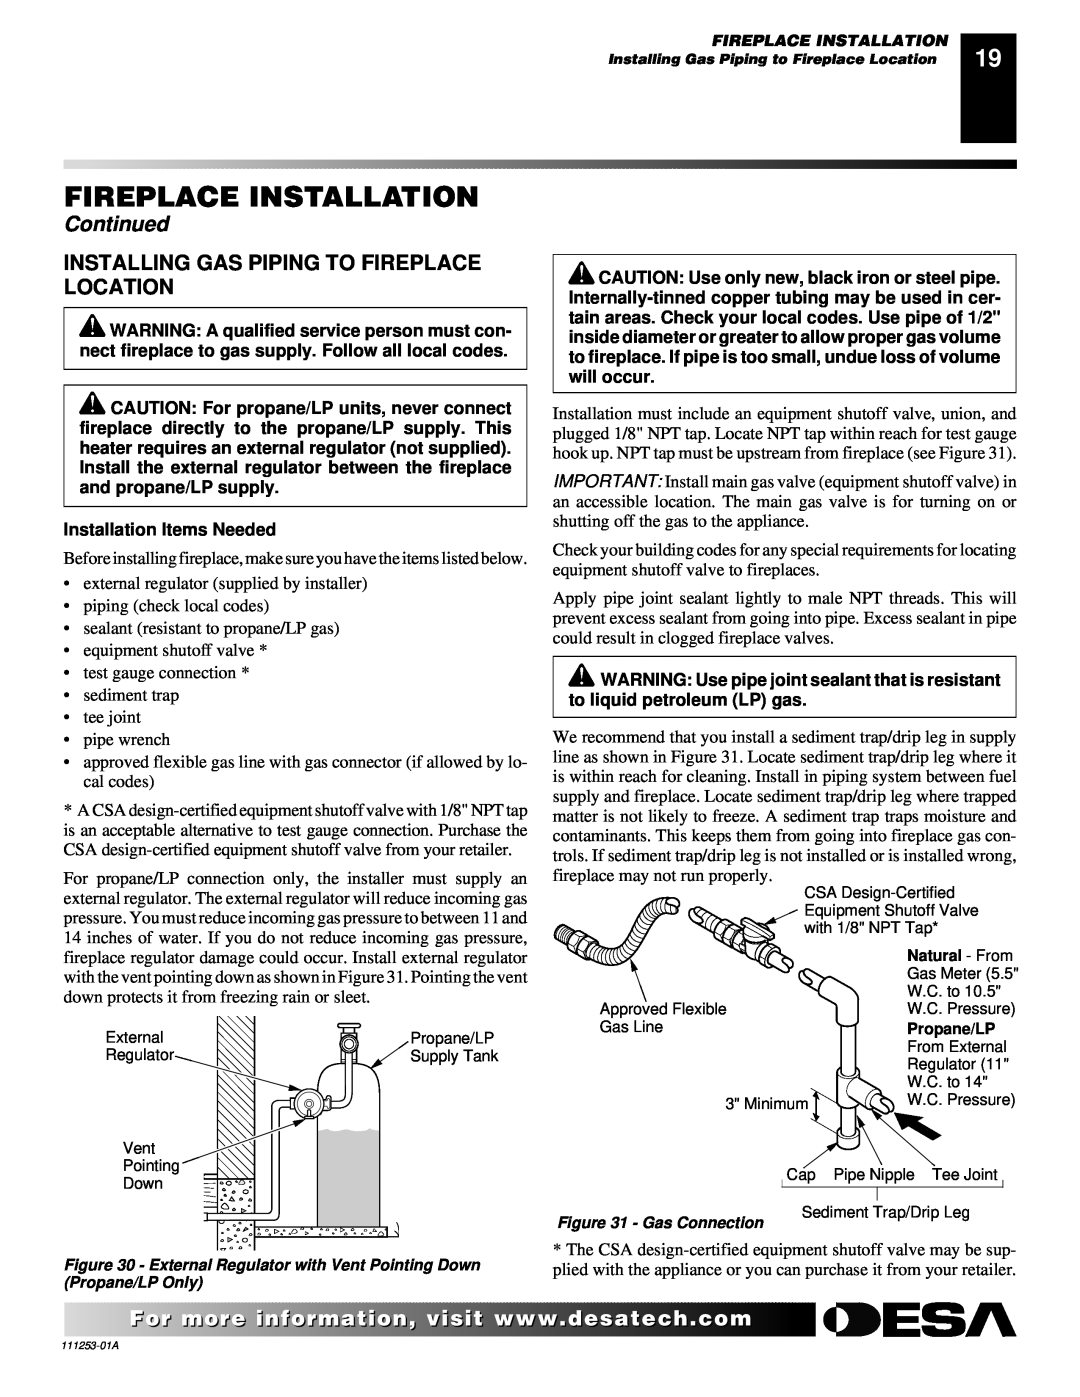 Desa (V)V36EPA(1), (V)V36ENA(1) Installing Gas Piping To Fireplace Location, Fireplace Installation, Continued 